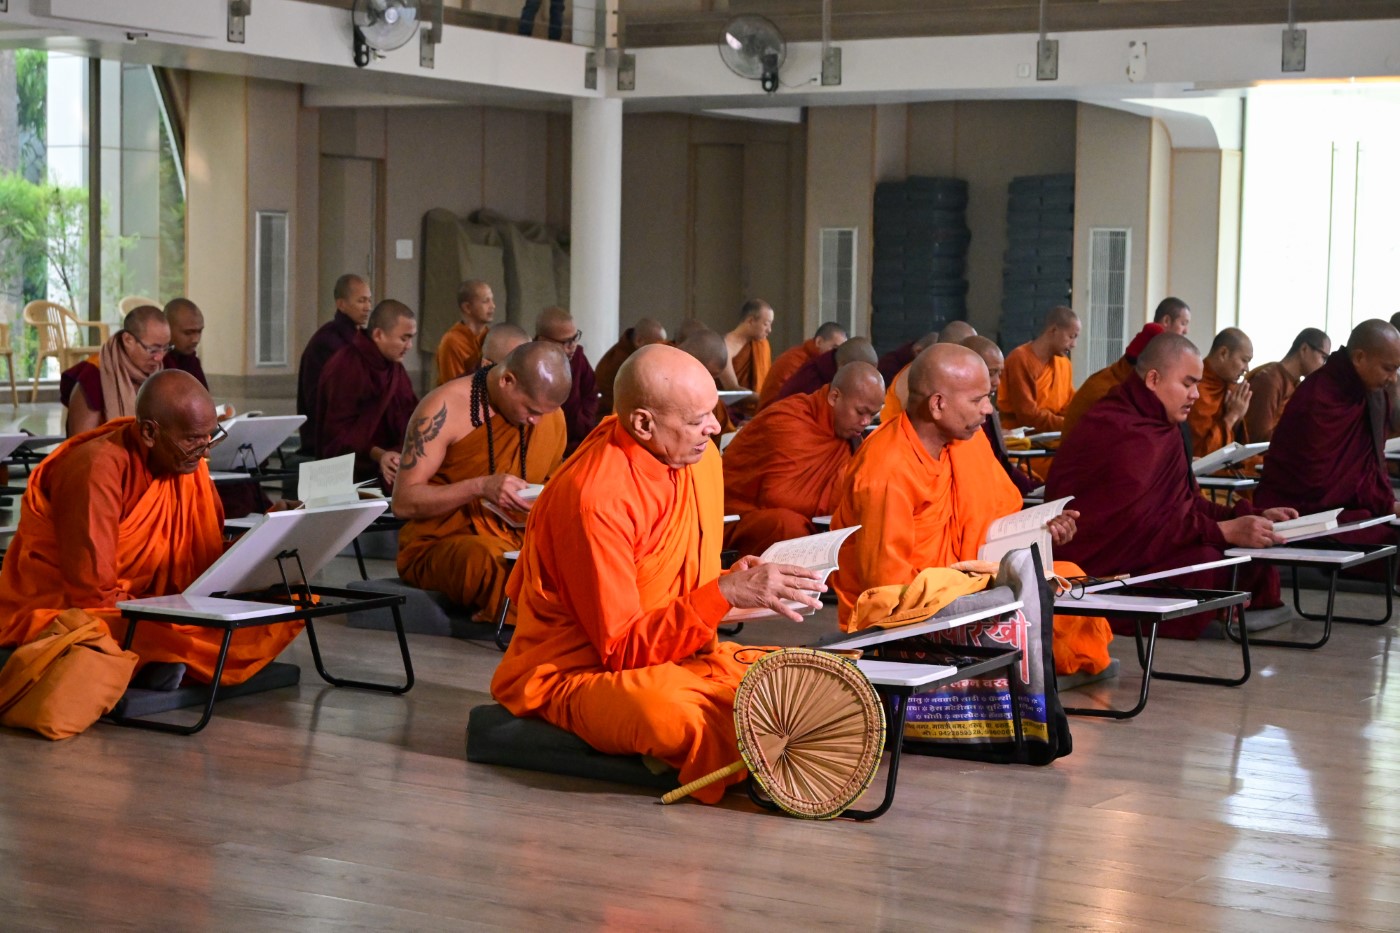 Visit by Buddhist monks